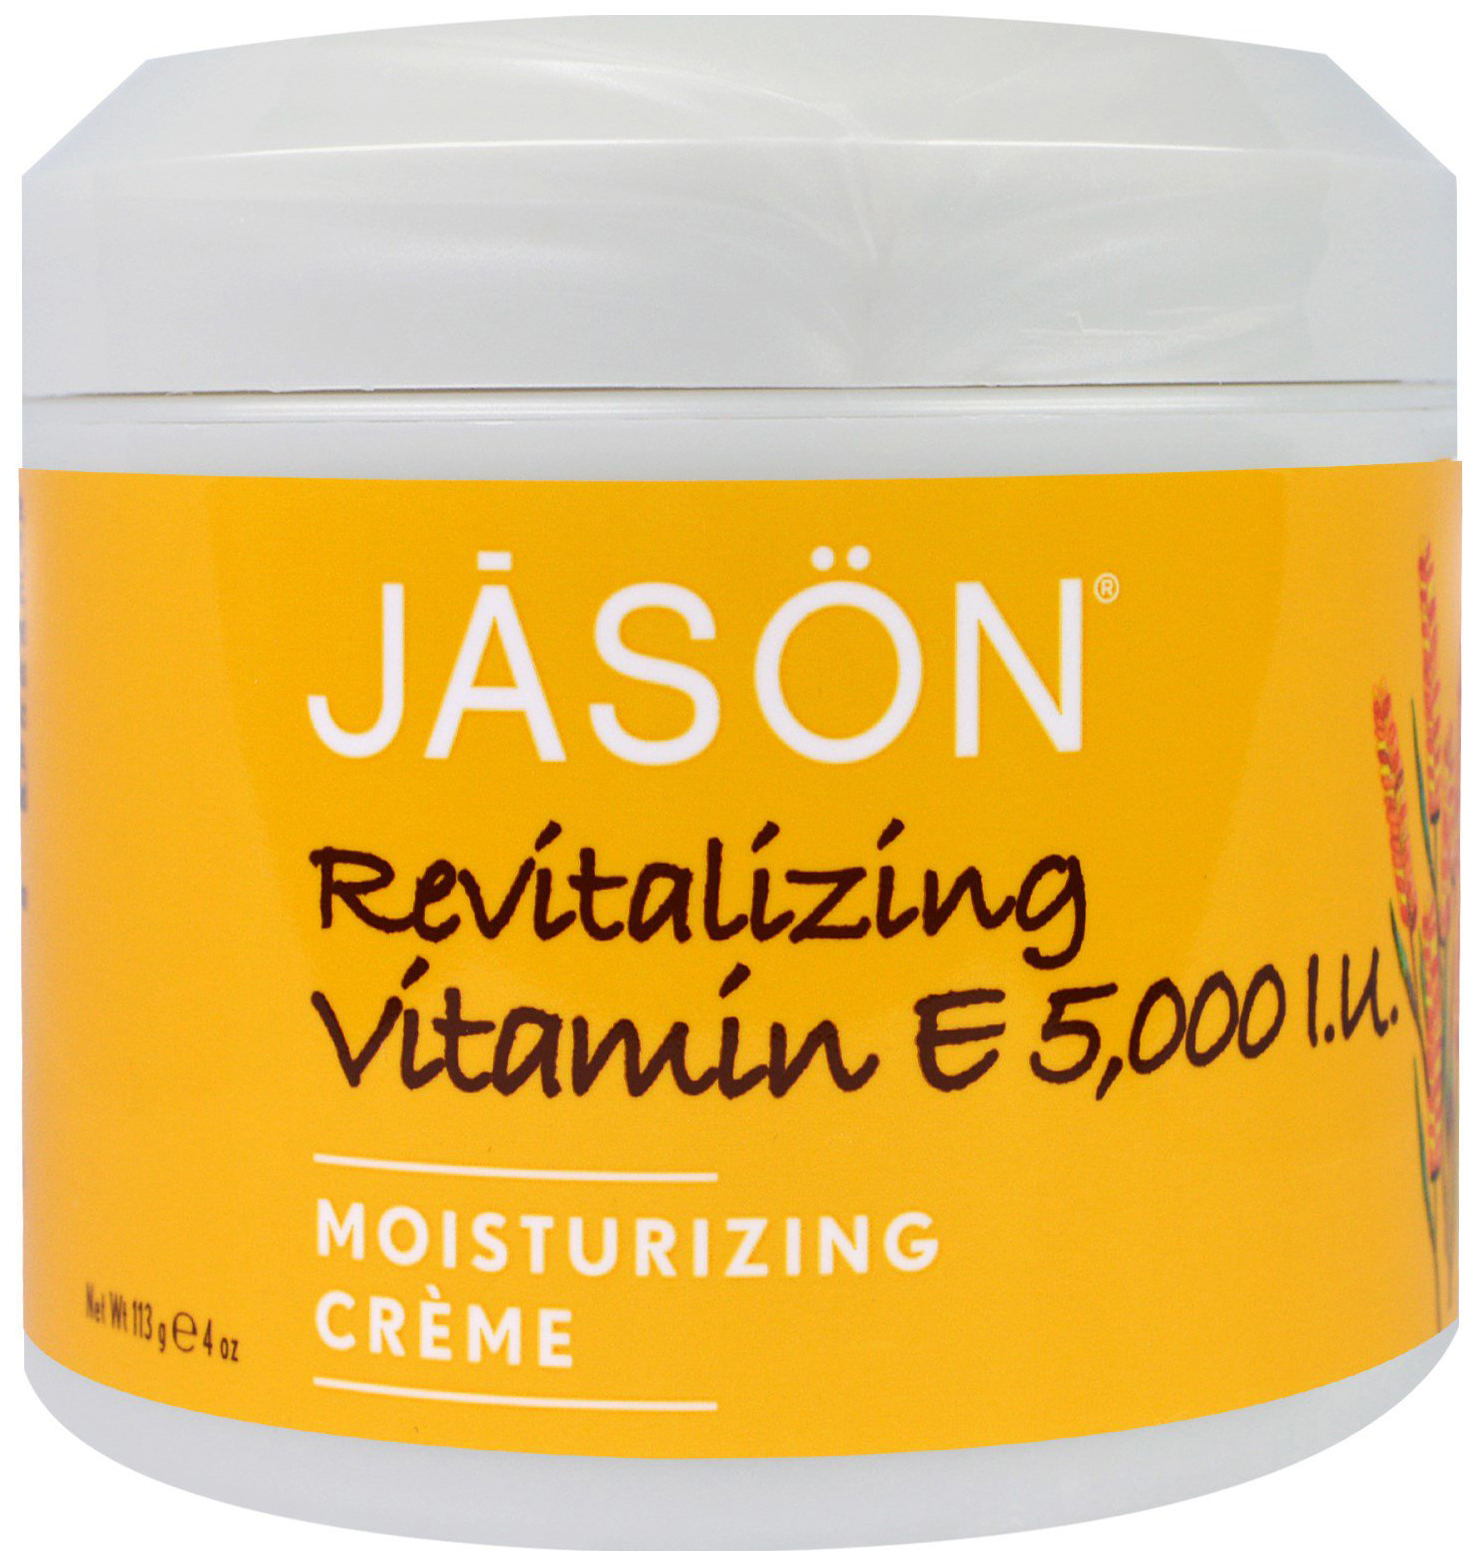 Крем для лица Jason Revitalizing Vitamin E Creme 5,000 IU eisenberg успокаивающий восстанавливающий крем для лица и области вокруг глаз creme apaisante reparatrice